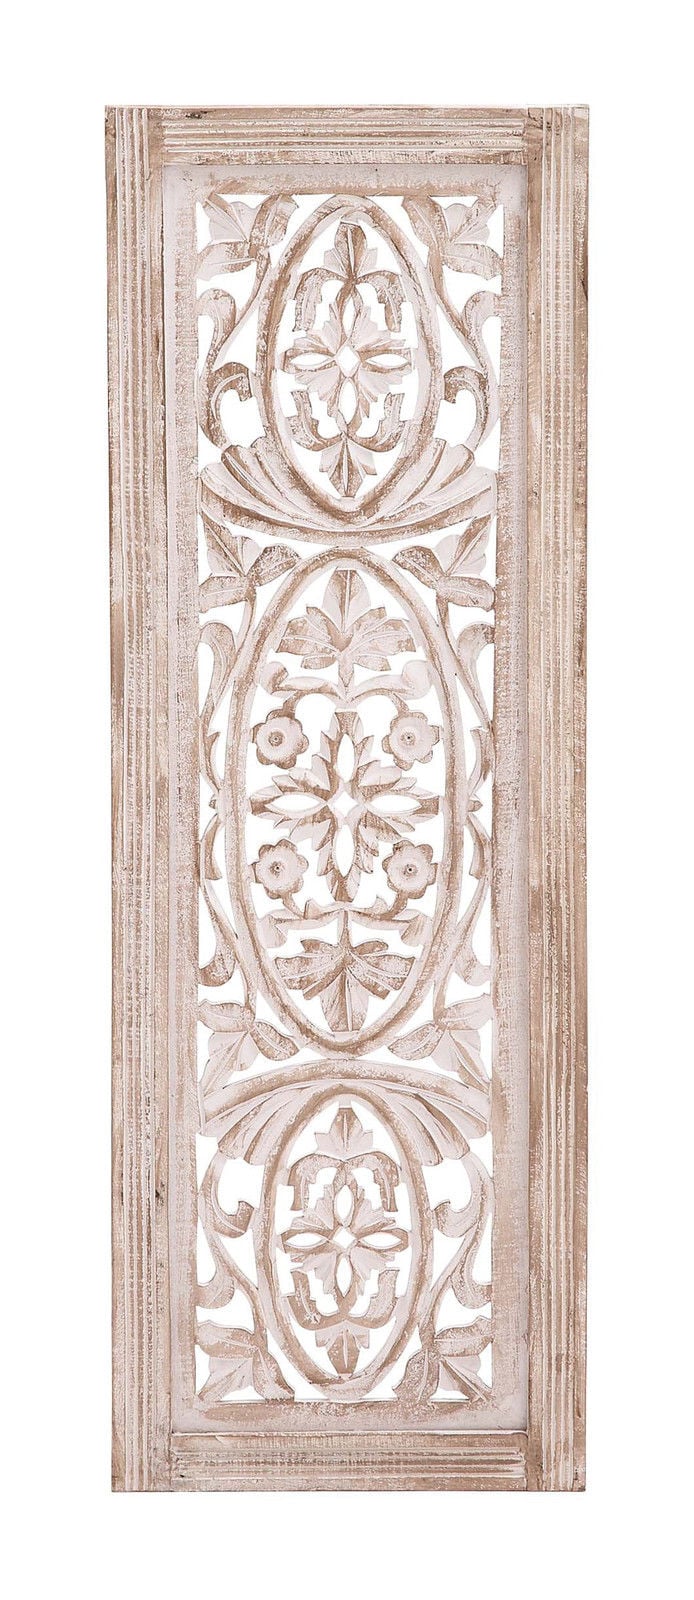 Decorative Wood Panel